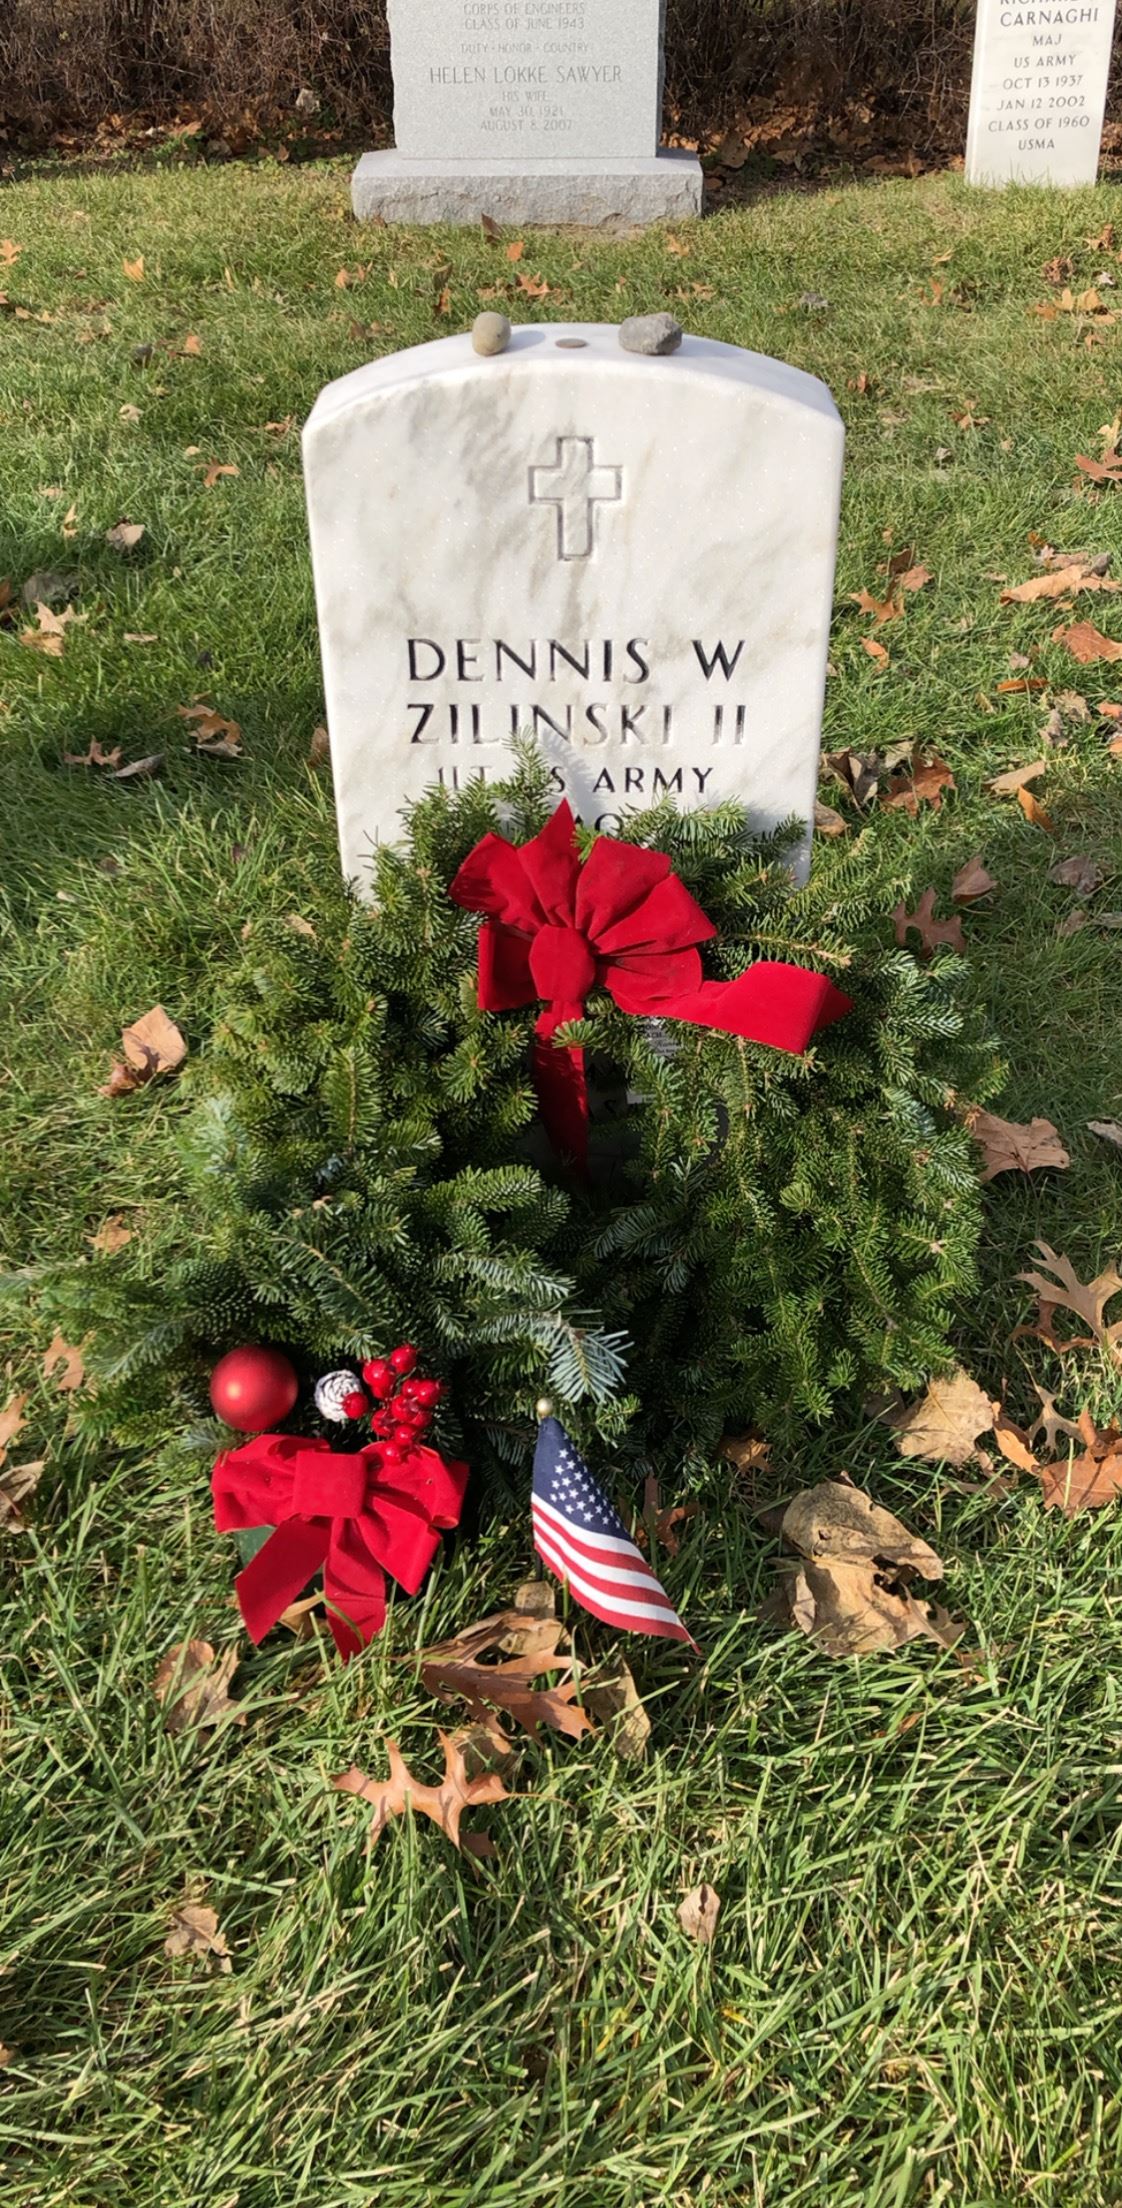 Dennis' decorated grave